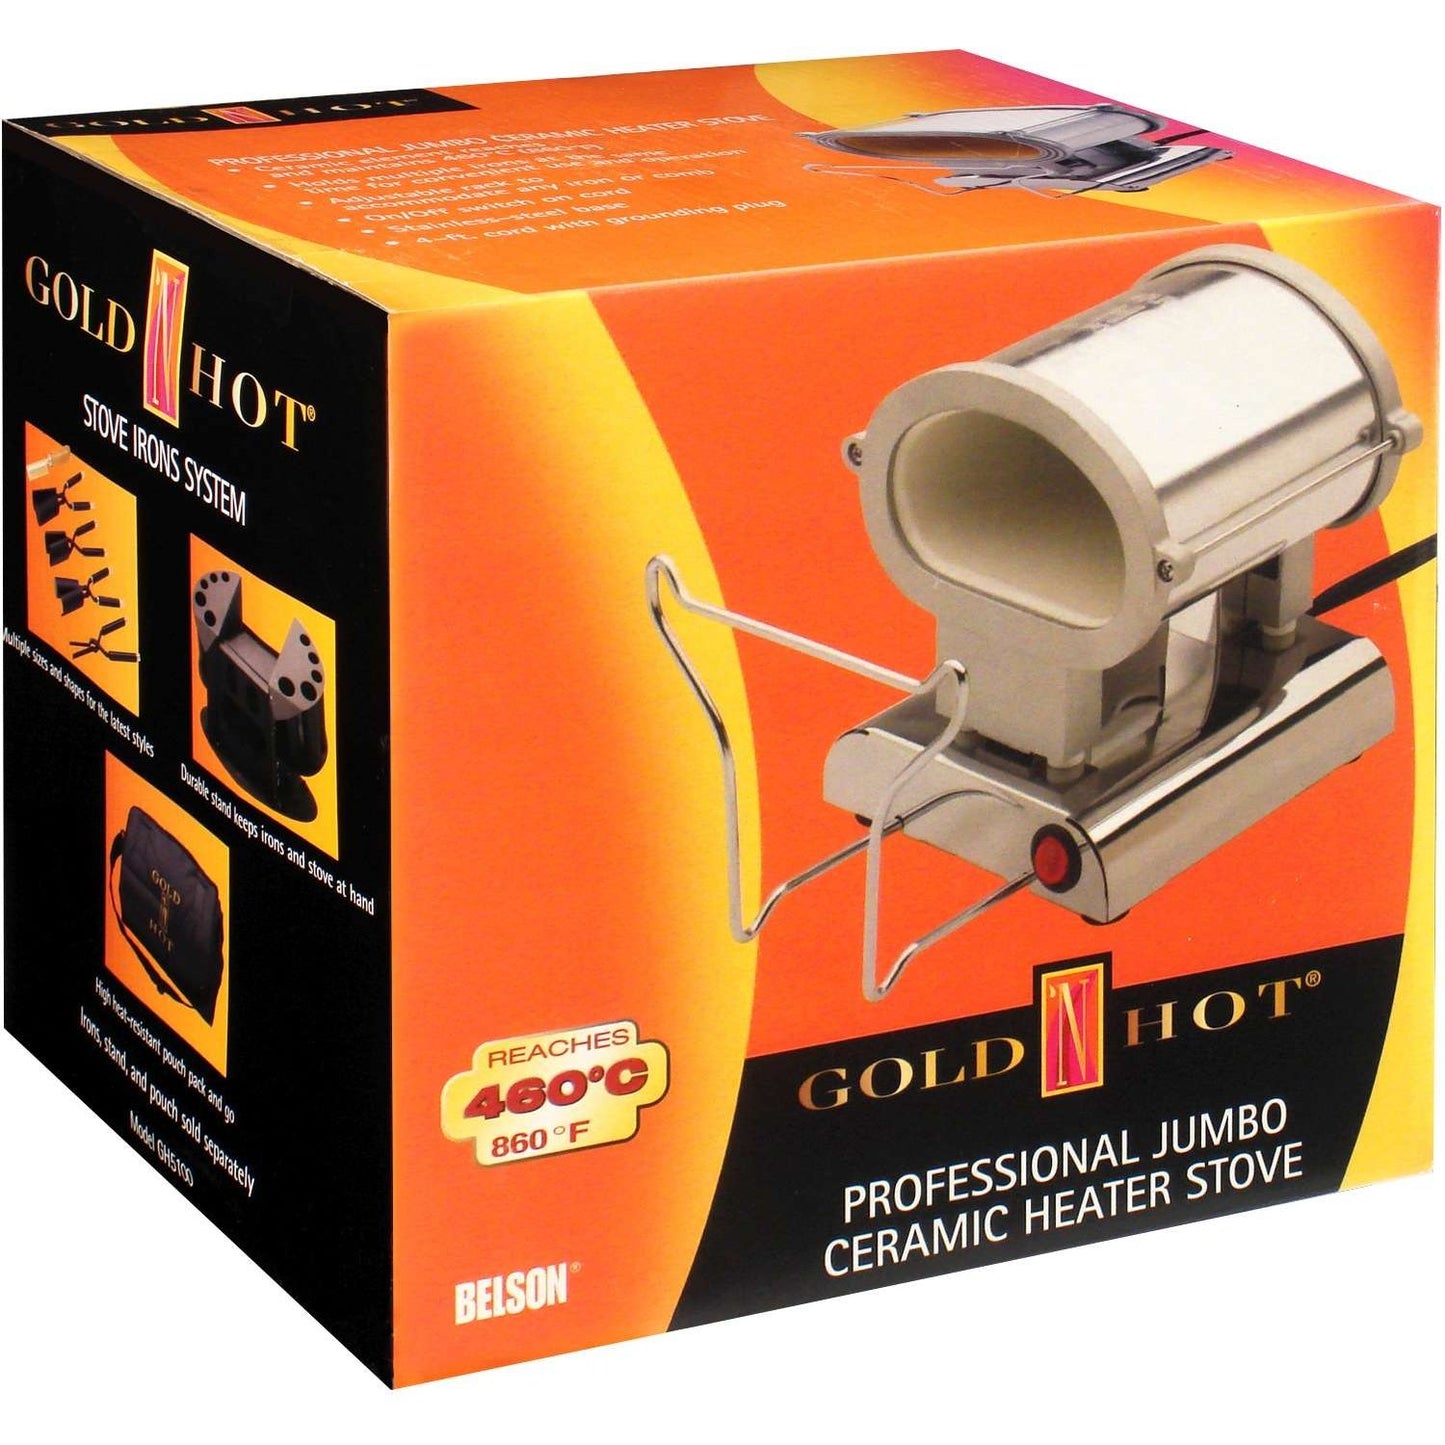 Estufa calefactora de cerámica Gold N Hot